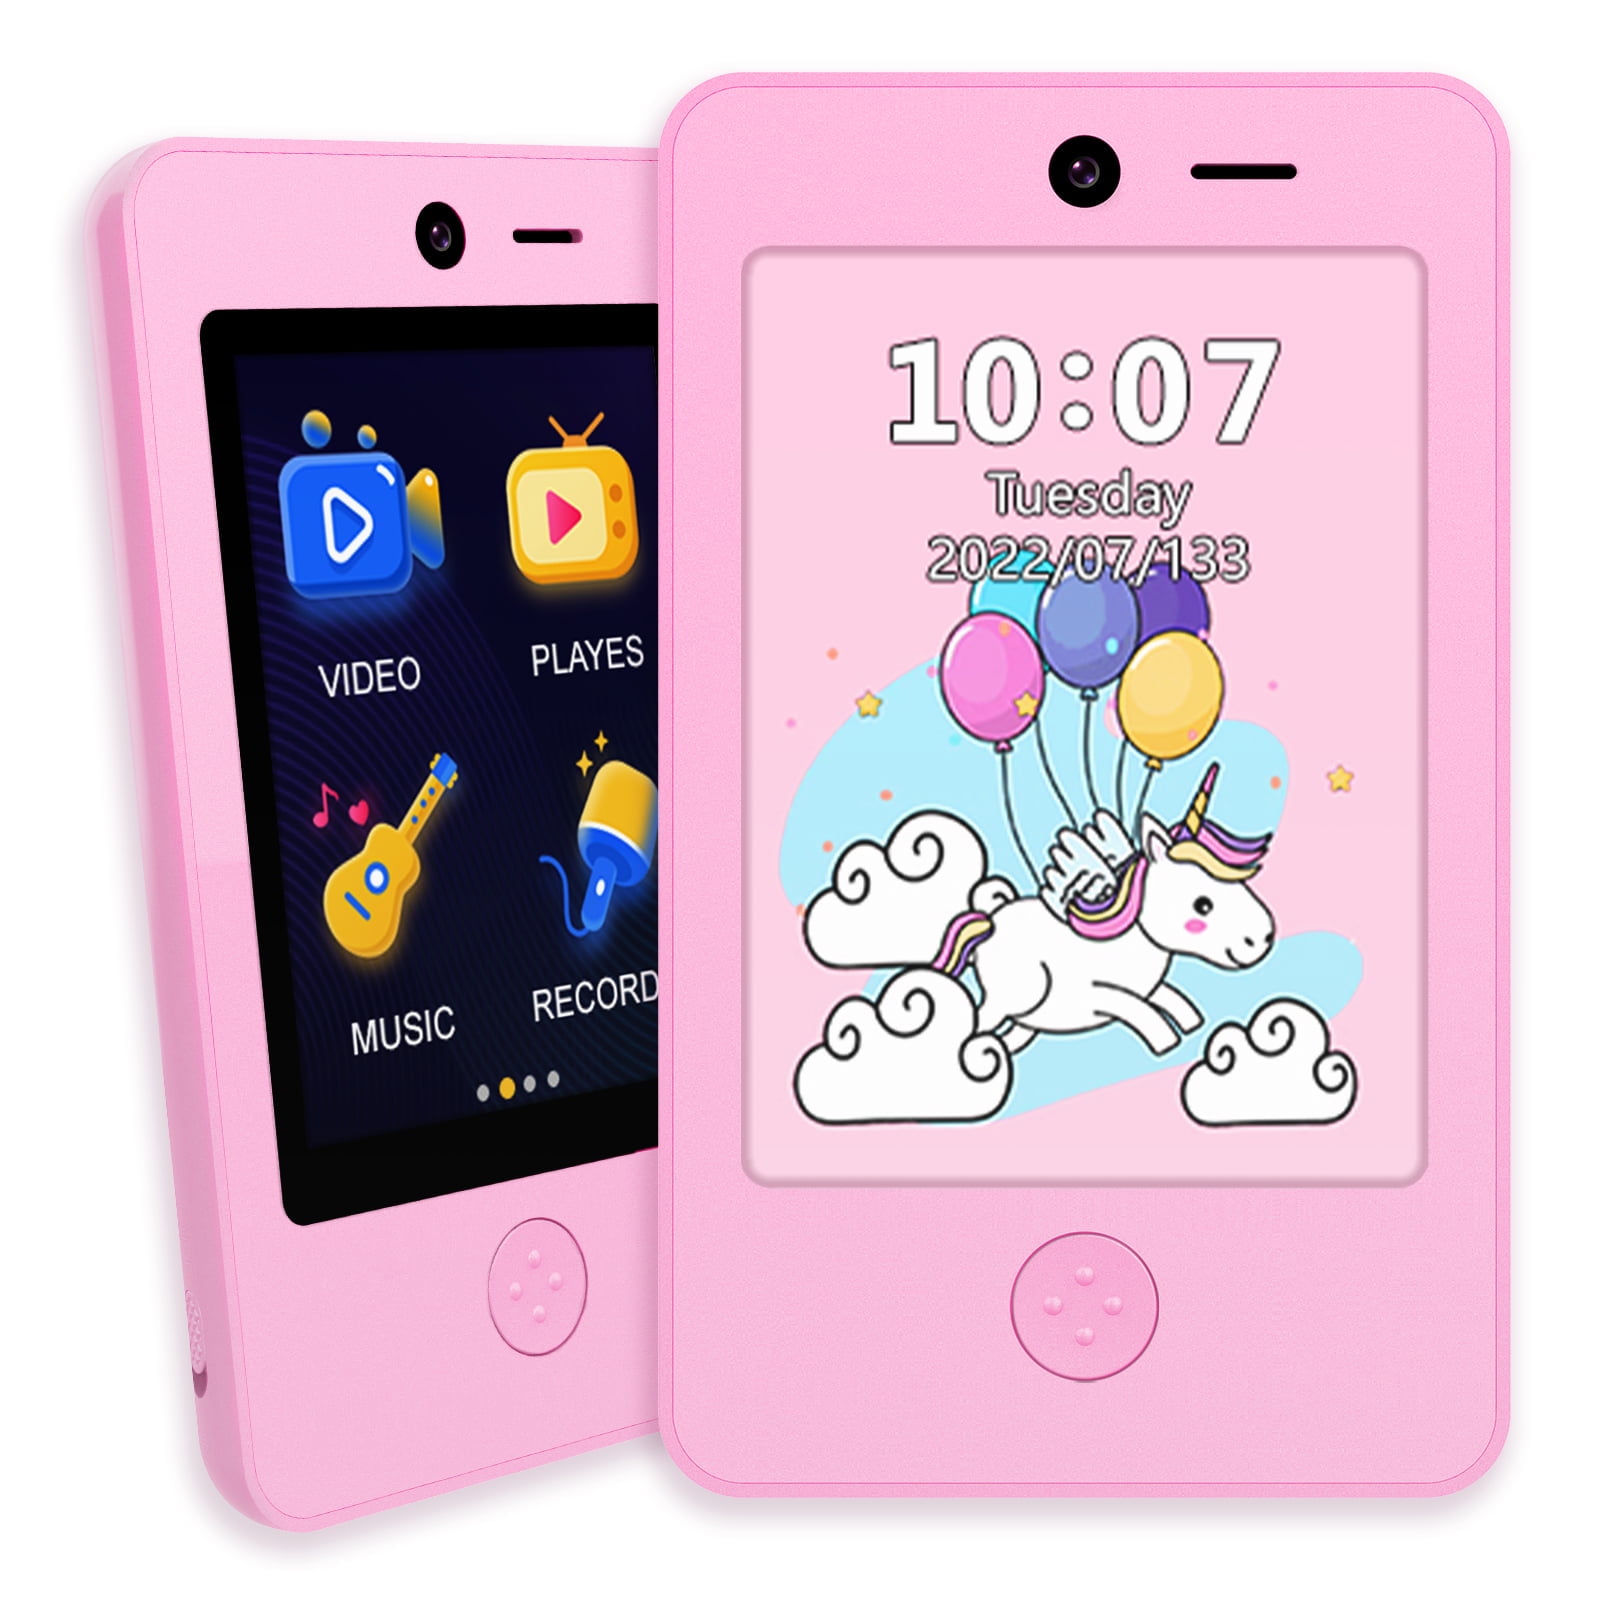 Achetez D01 Smart Wireless Wireless 3 km Longue Distance Talkie Talkie  Parent-child Voice Interphone Interactive Toy - Bleu / Rose de Chine